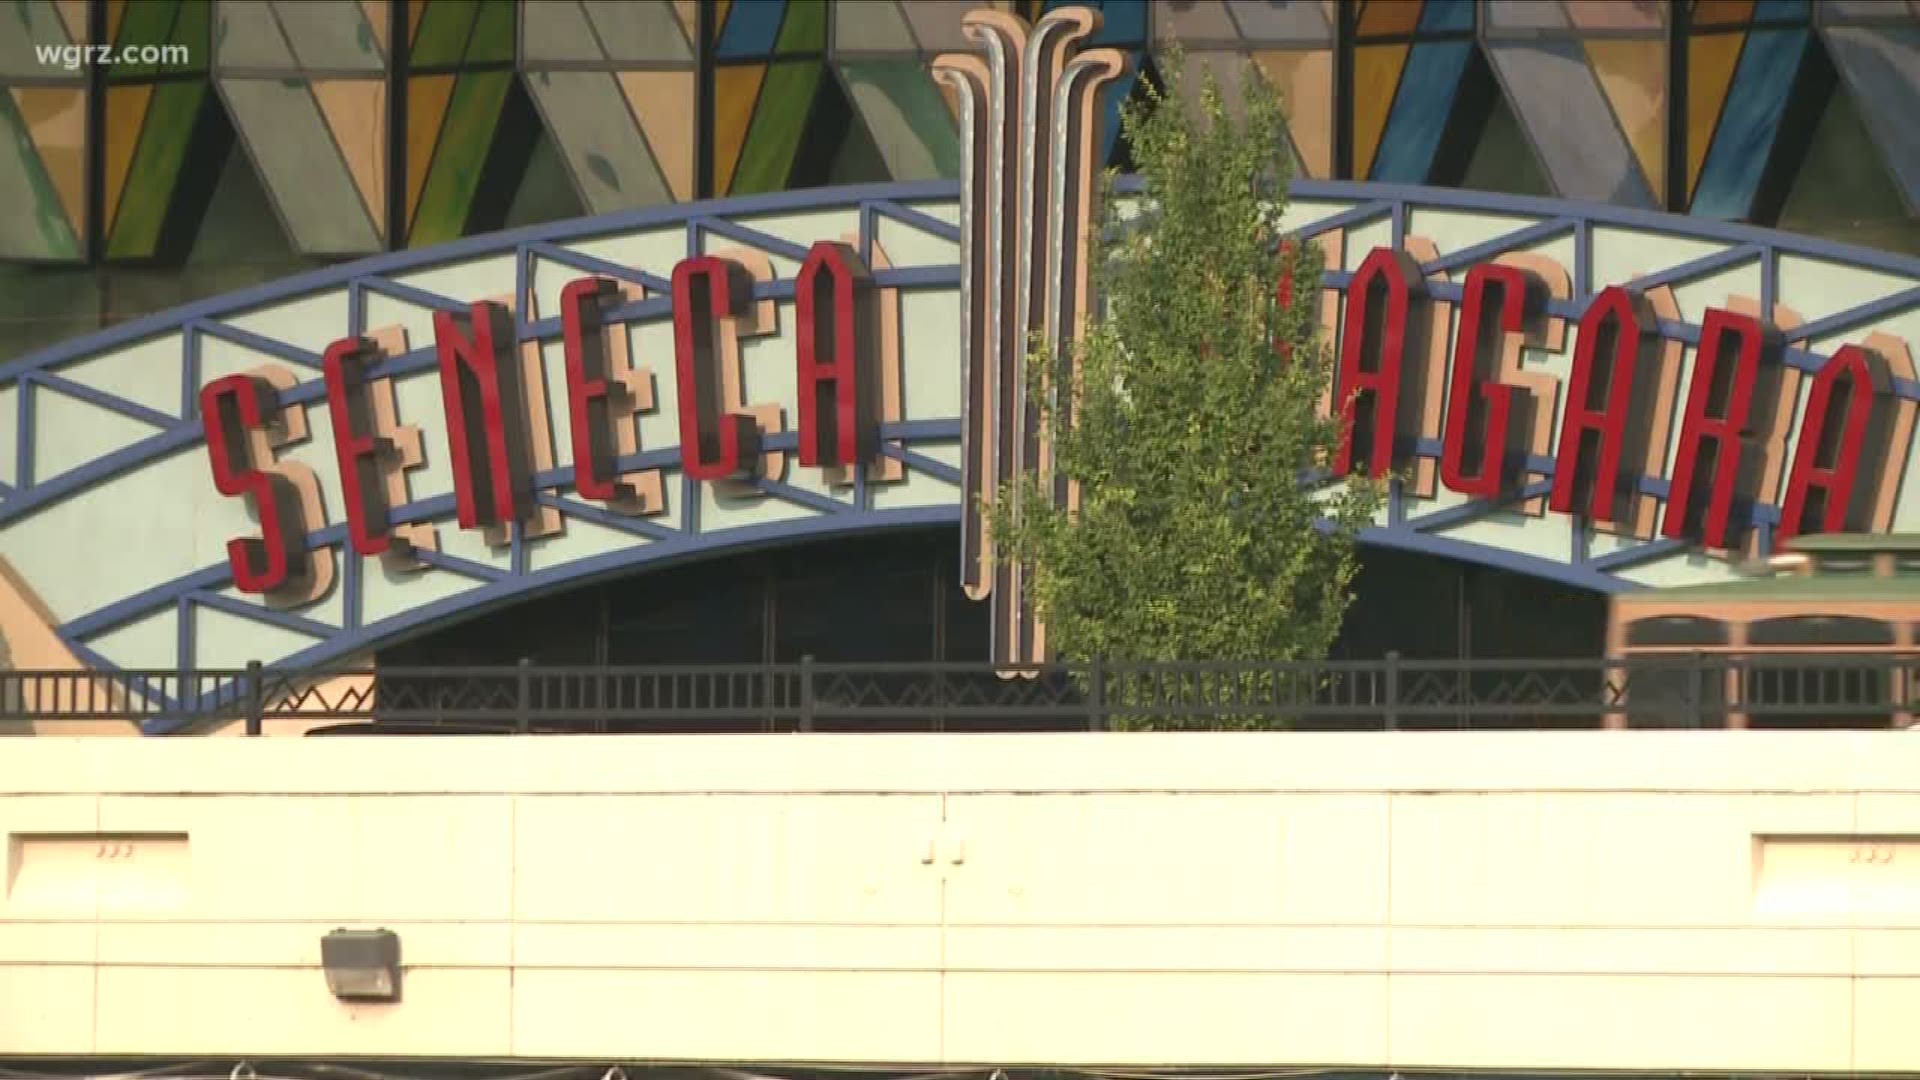 Questions linger regarding casino payments